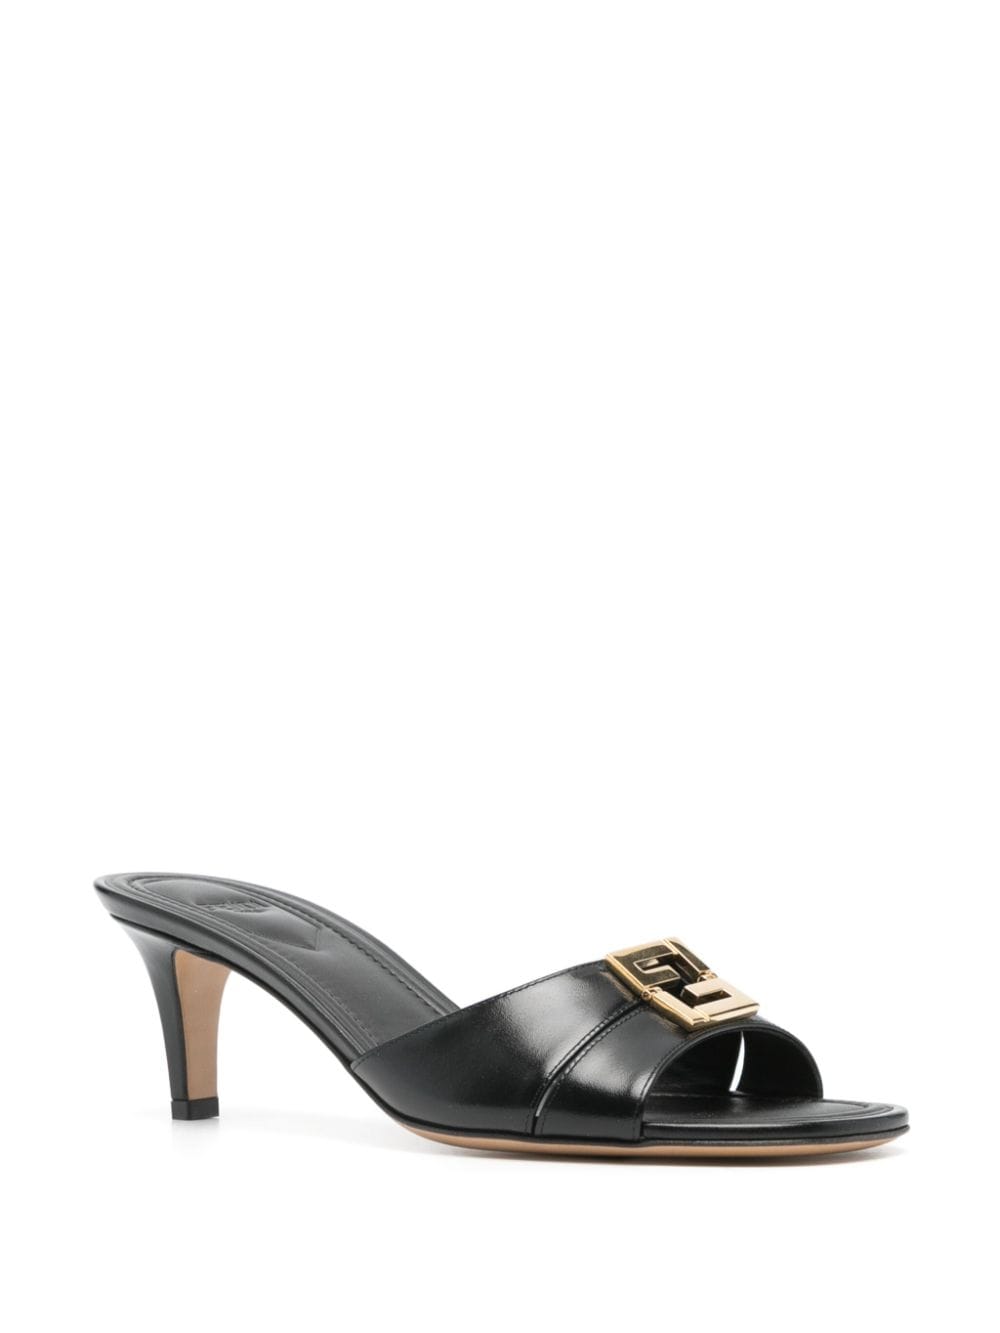 Black calf leather almond open toe sandals